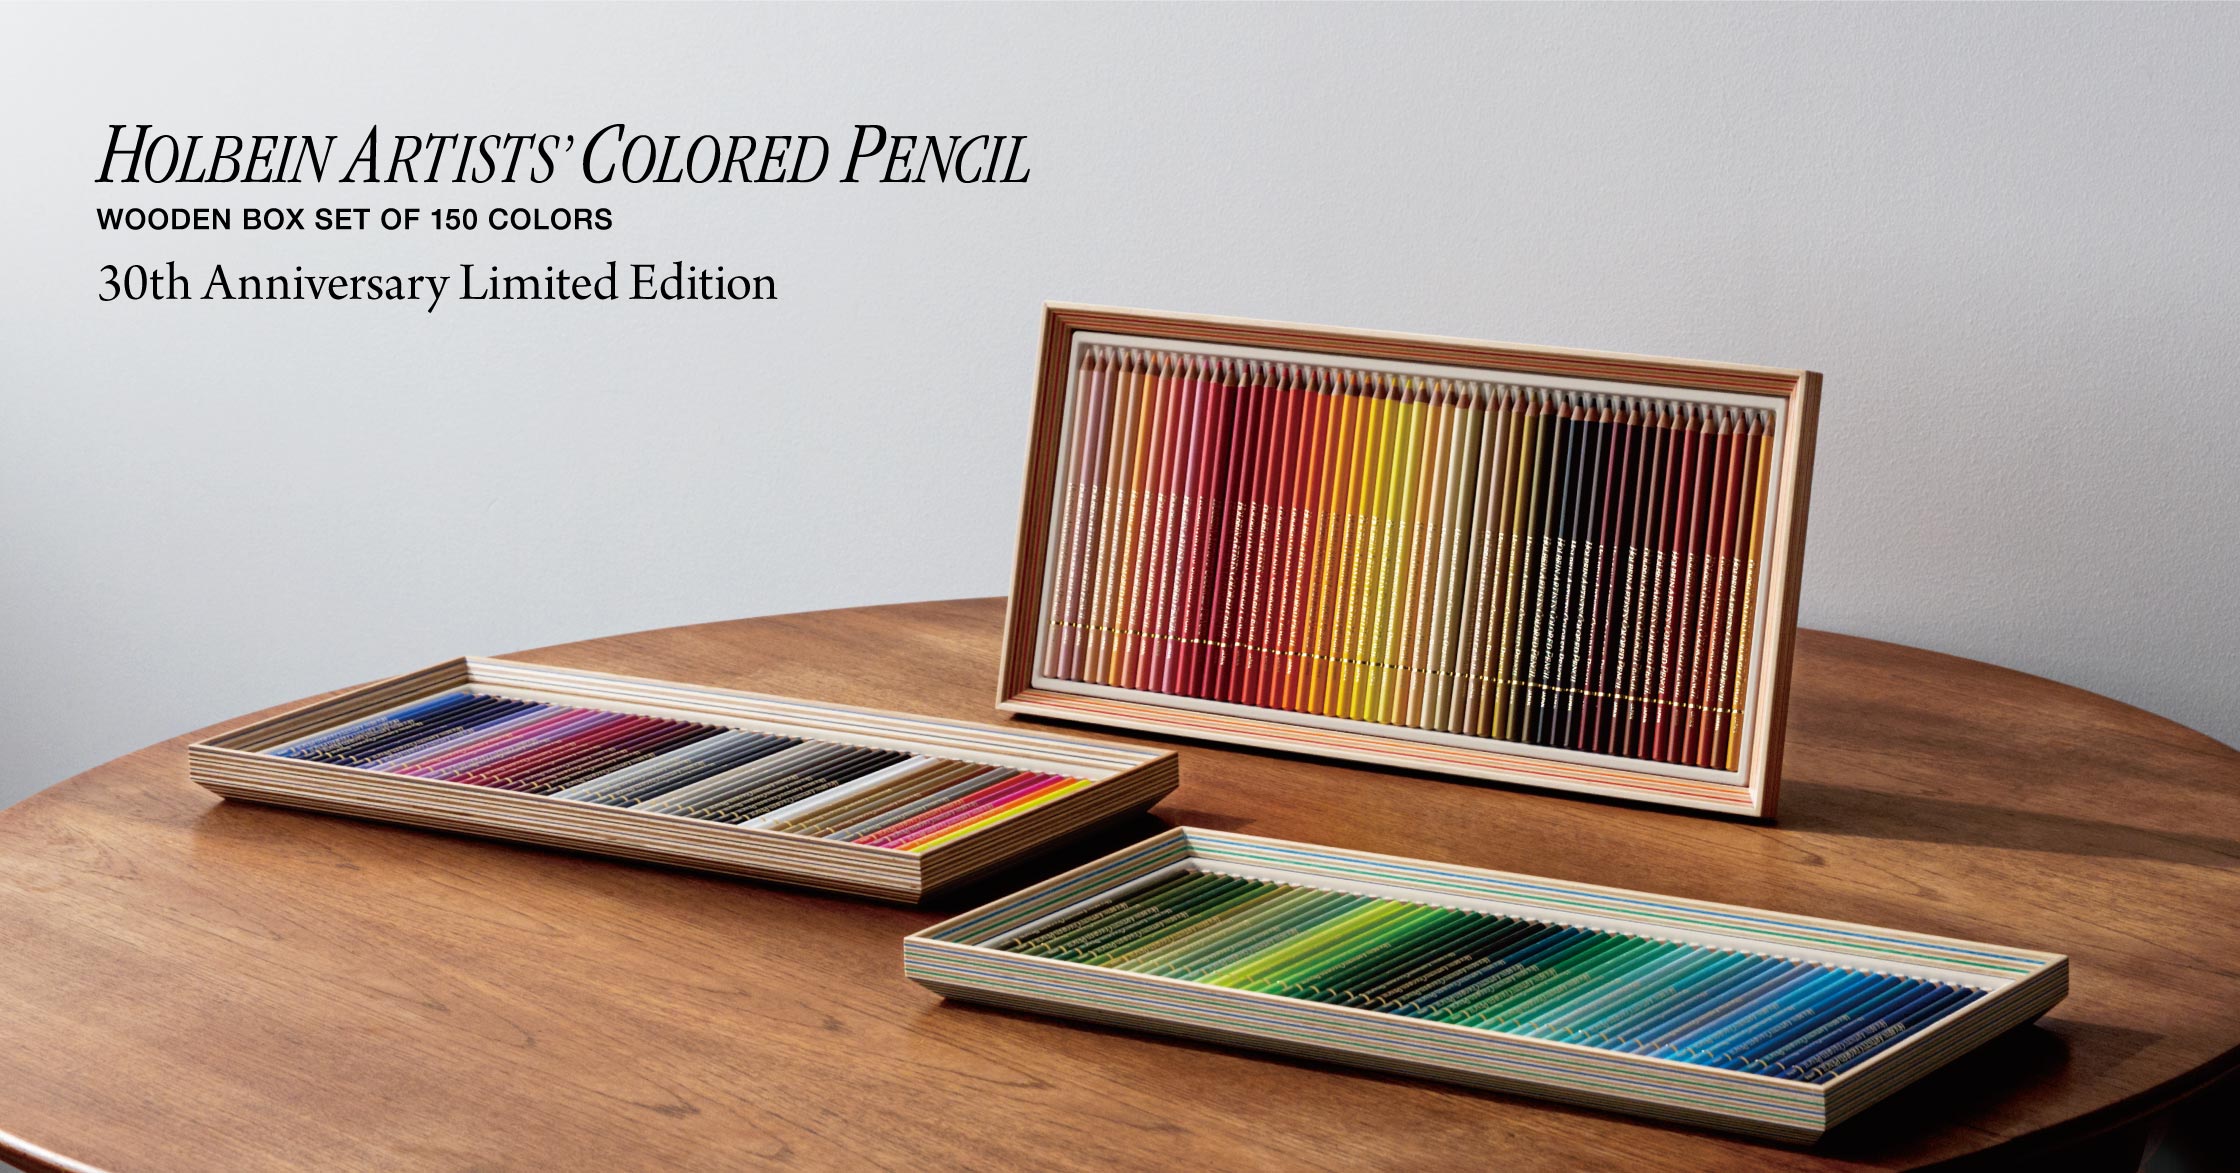 Artist Colored Pencil Wooden Box